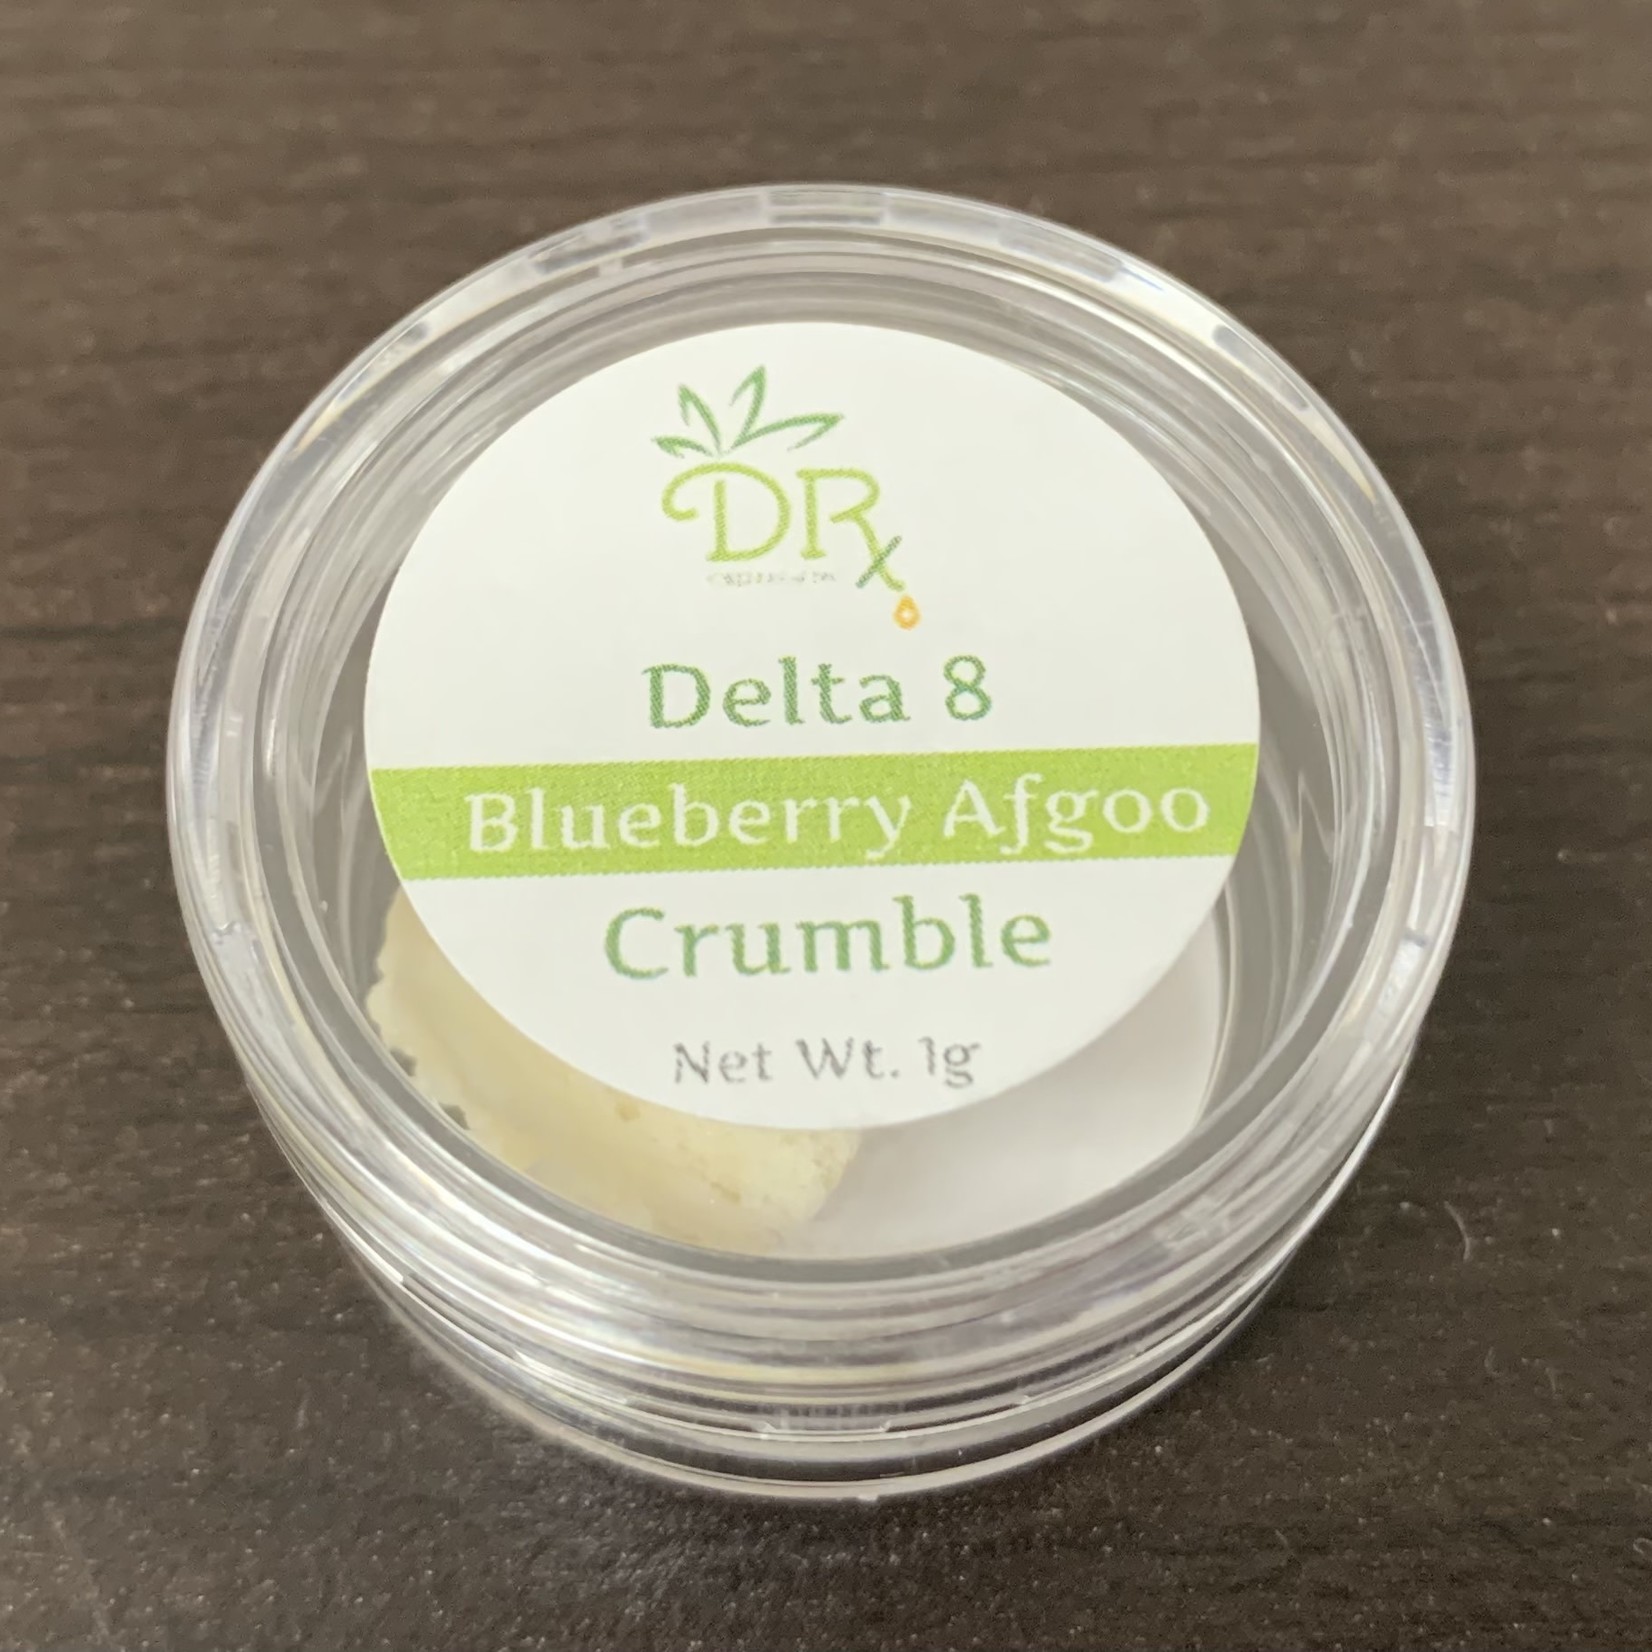 DRx Delta 8 Crumble Blueberry Afgoo